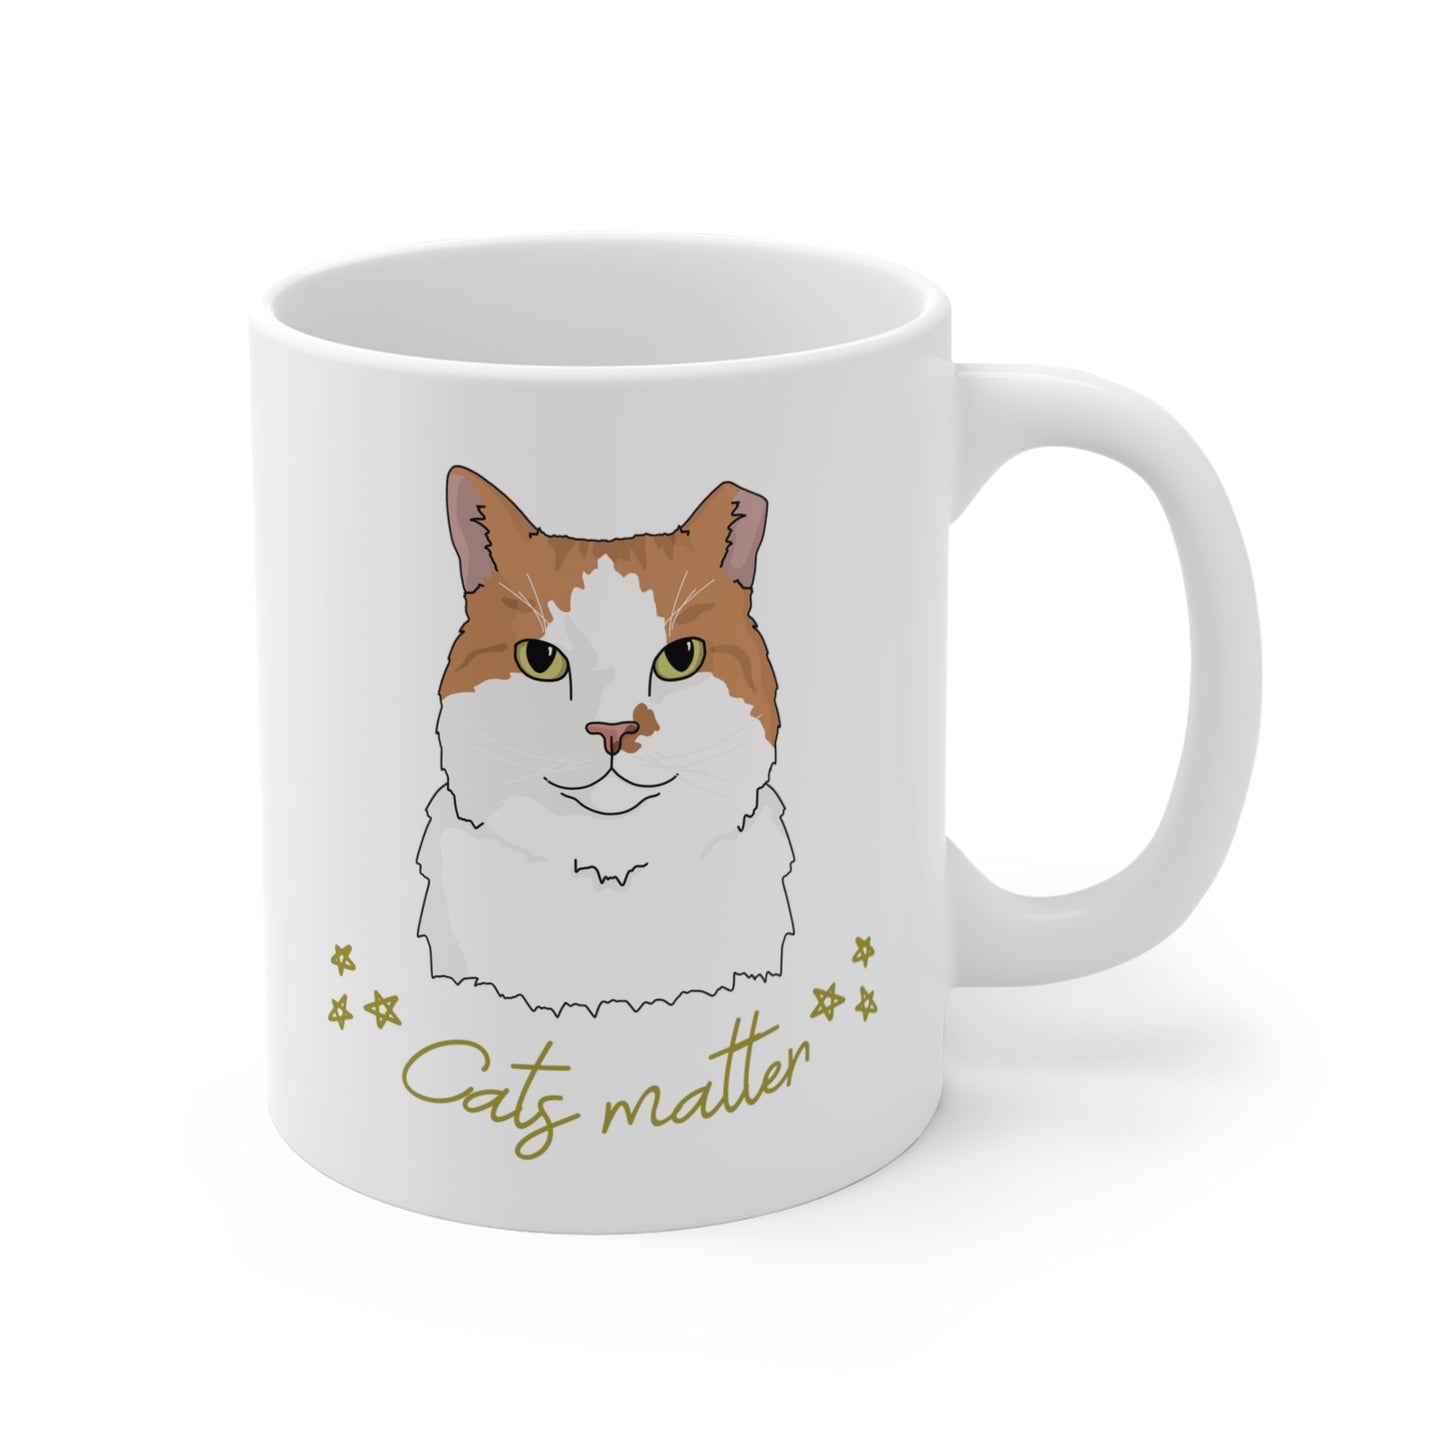 Cats Matter | Mug - Detezi Designs-25285488338036934939